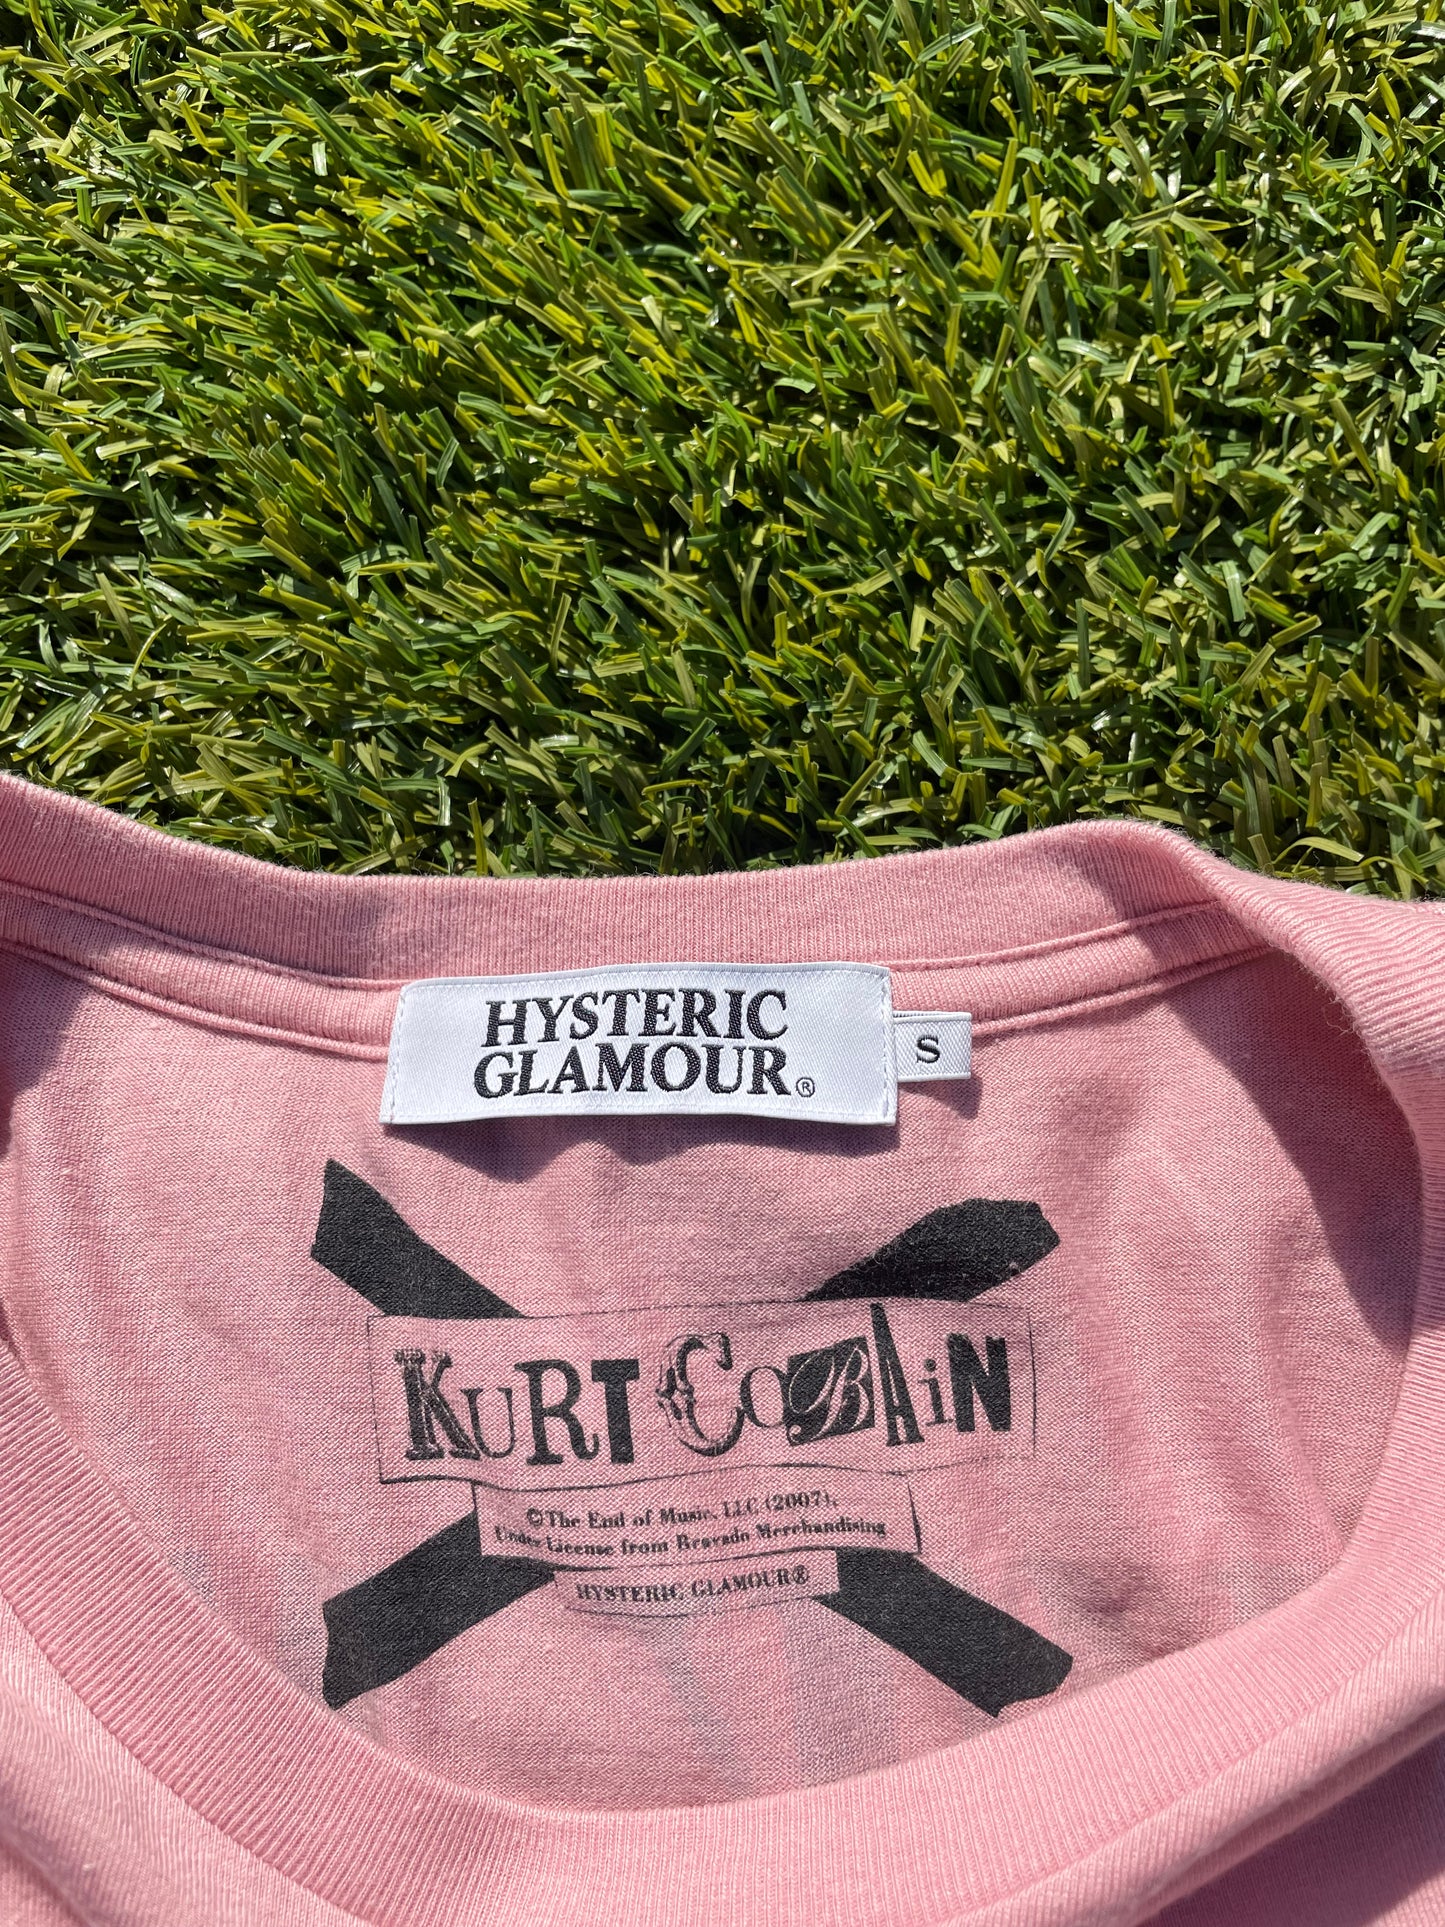 Hysteric Glamour Kurt Cobain “Dive” T-Shirt